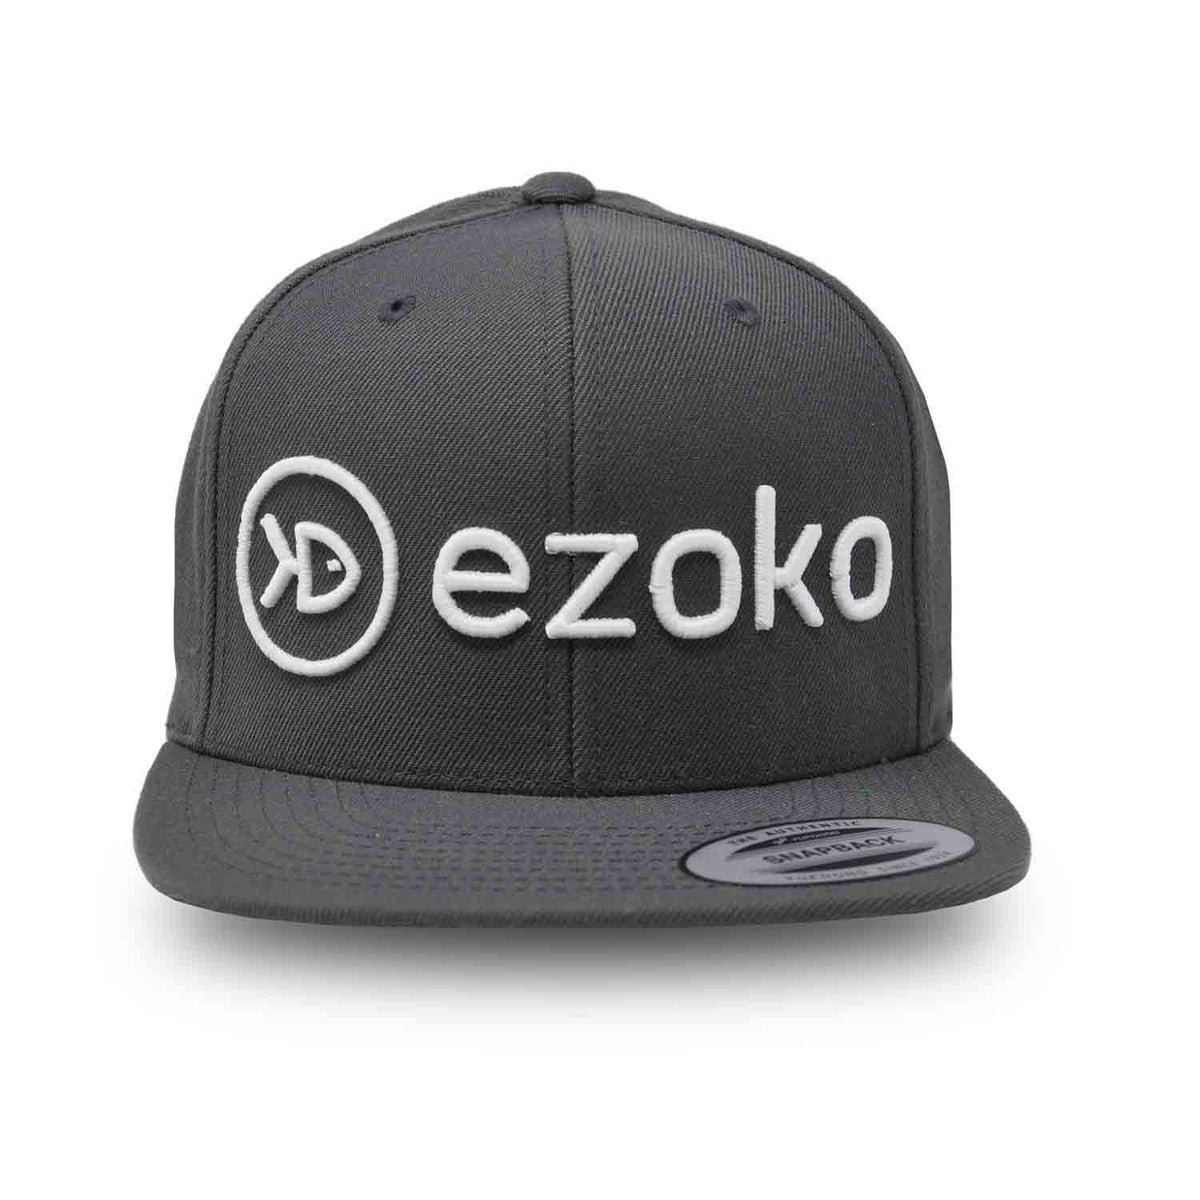 Ezoko Classics YUPOONG Flat Brim Cap Dark Grey White Hats